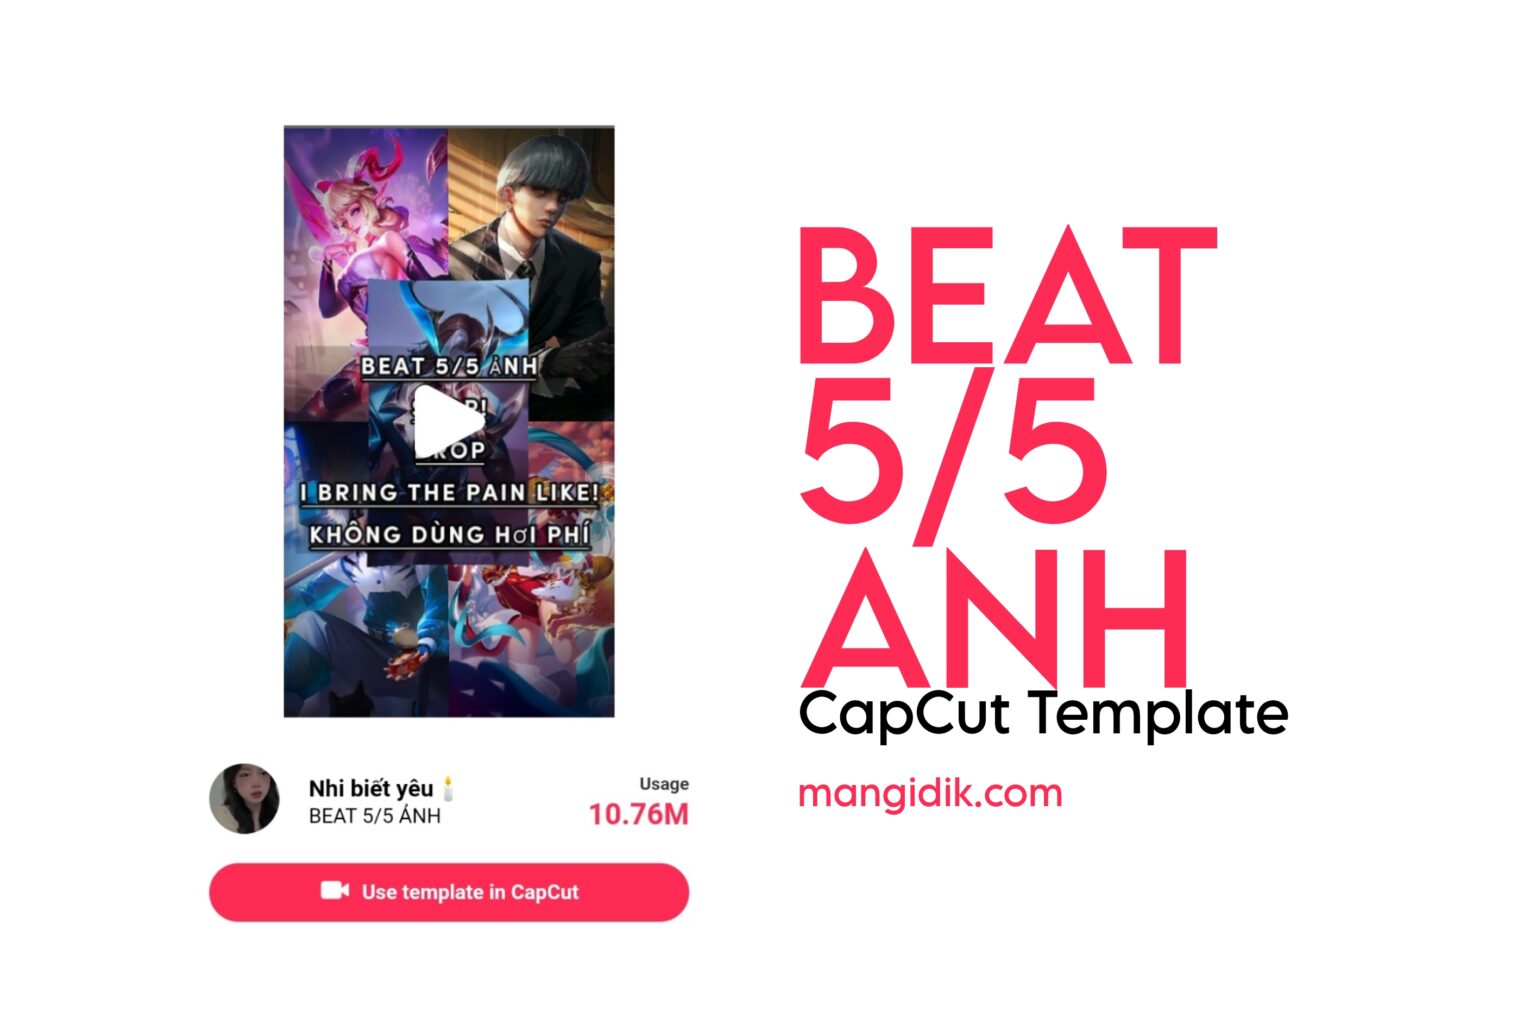 beat-5-5-anh-capcut-template-link-new-trend-2023-mang-idik